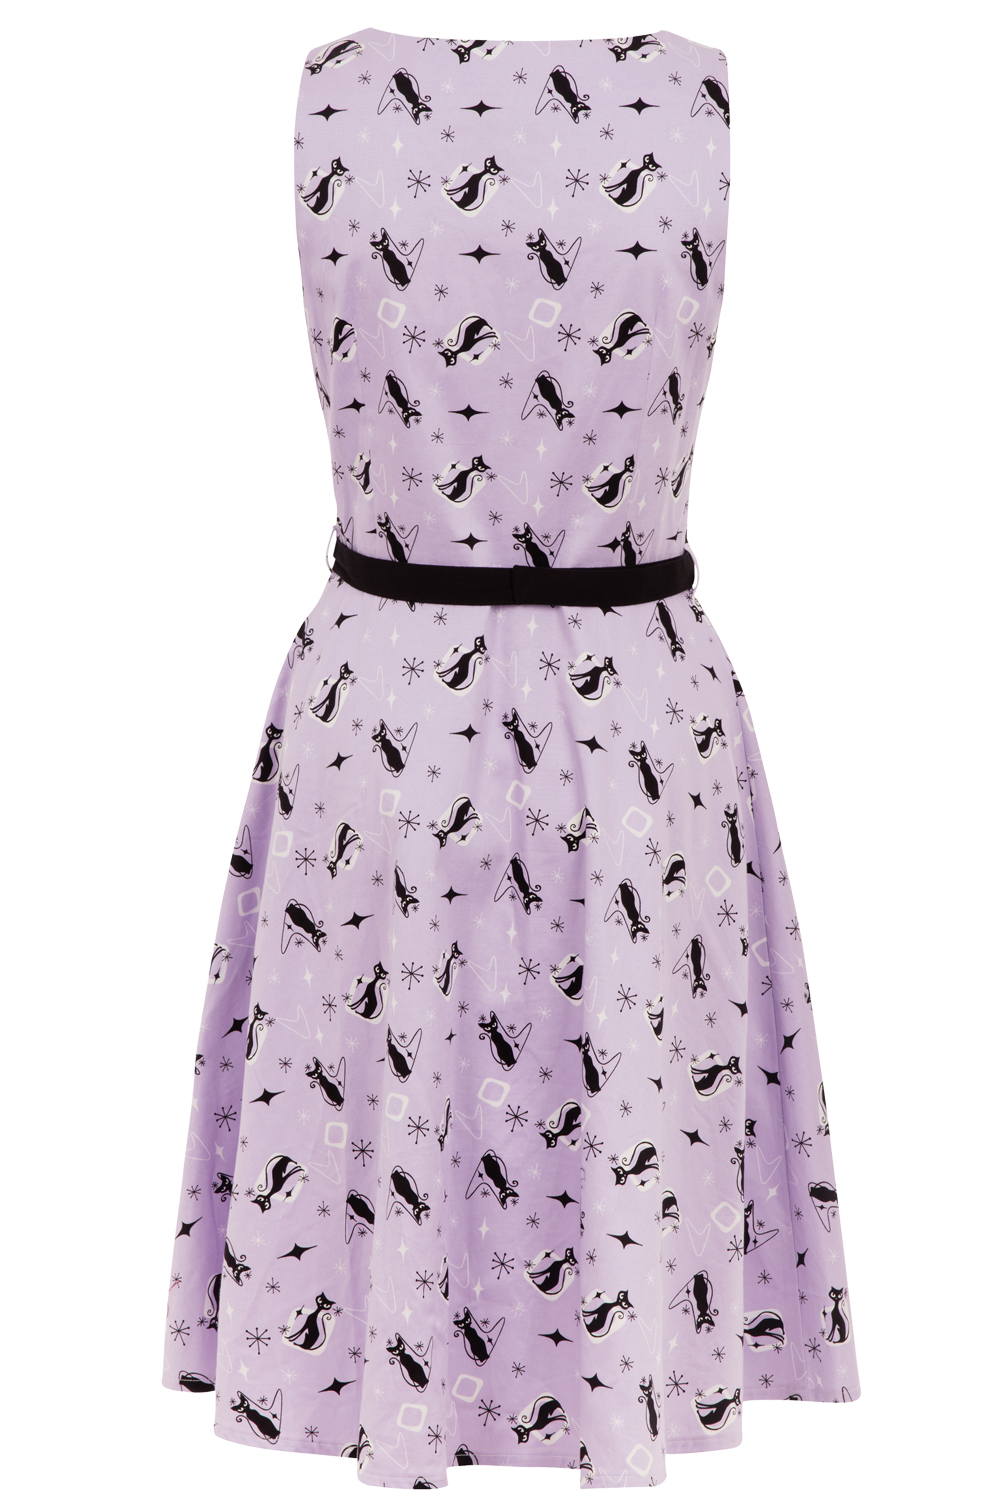 Voodoo Vixen Lavender Kitty Dress